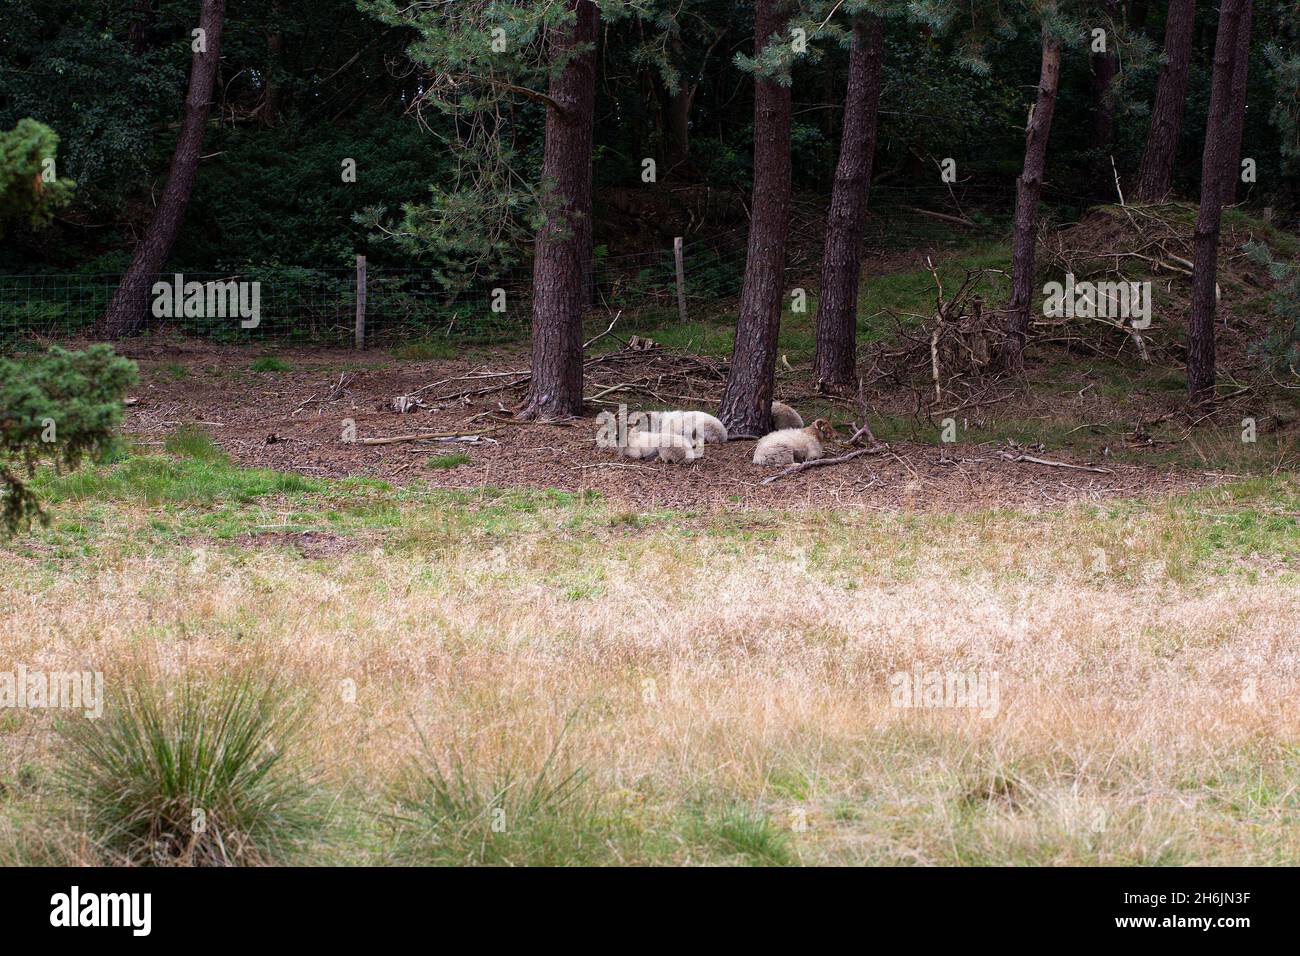 Pequeña manada de oveja Drenthe Heath (Drents Heideschaap) utilizada para el manegement de vegetación en el bosque Foto de stock